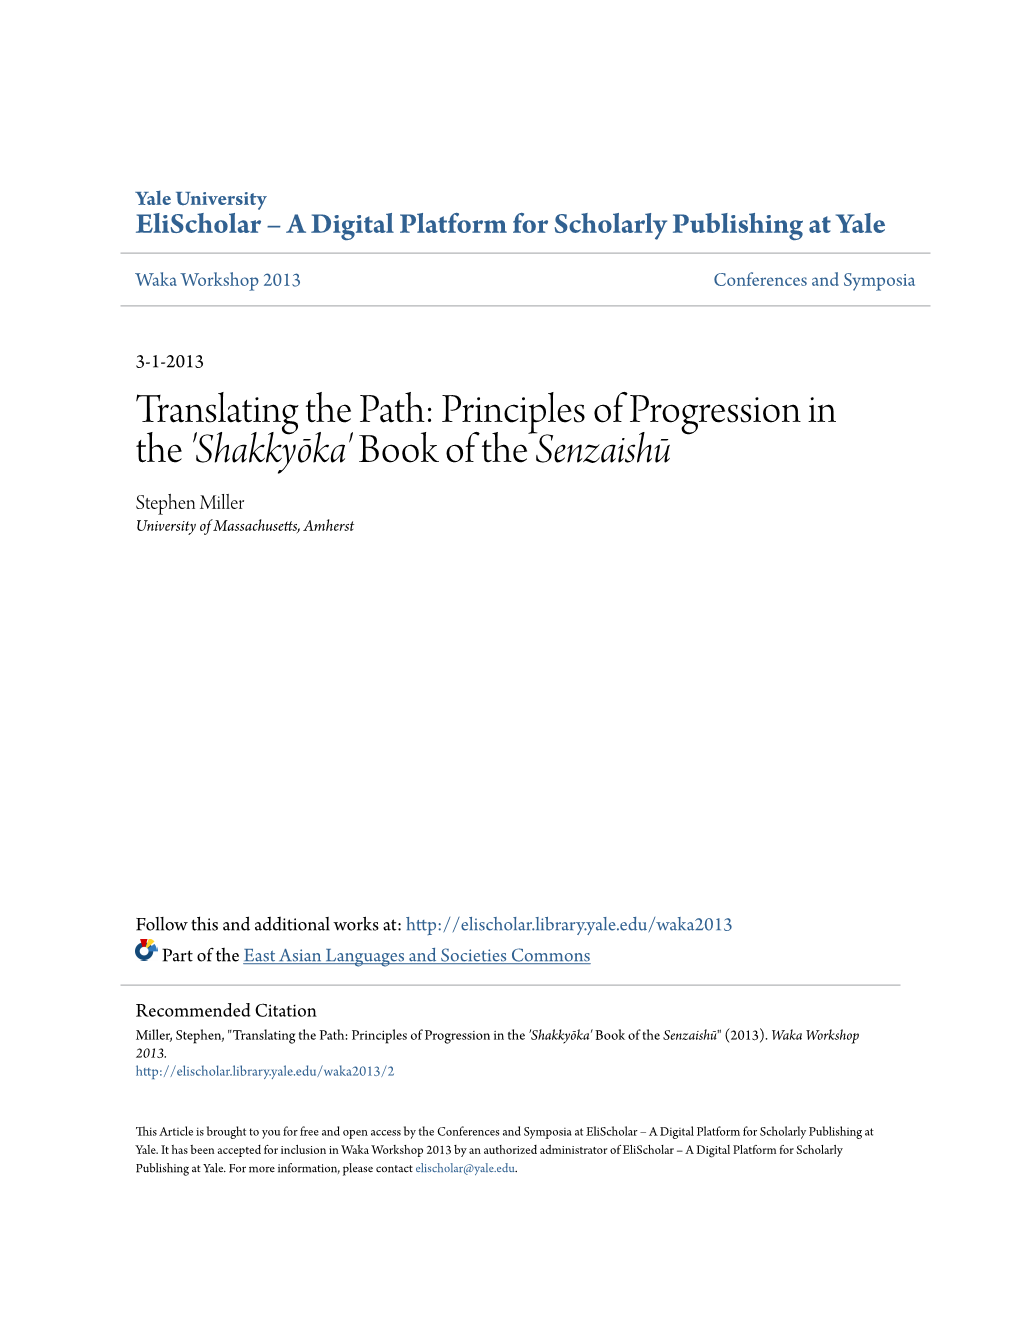 Translating the Path: Principles of Progression in the 'Shakkyōka' Book of the Senzaishū Stephen Miller University of Massachusetts, Amherst